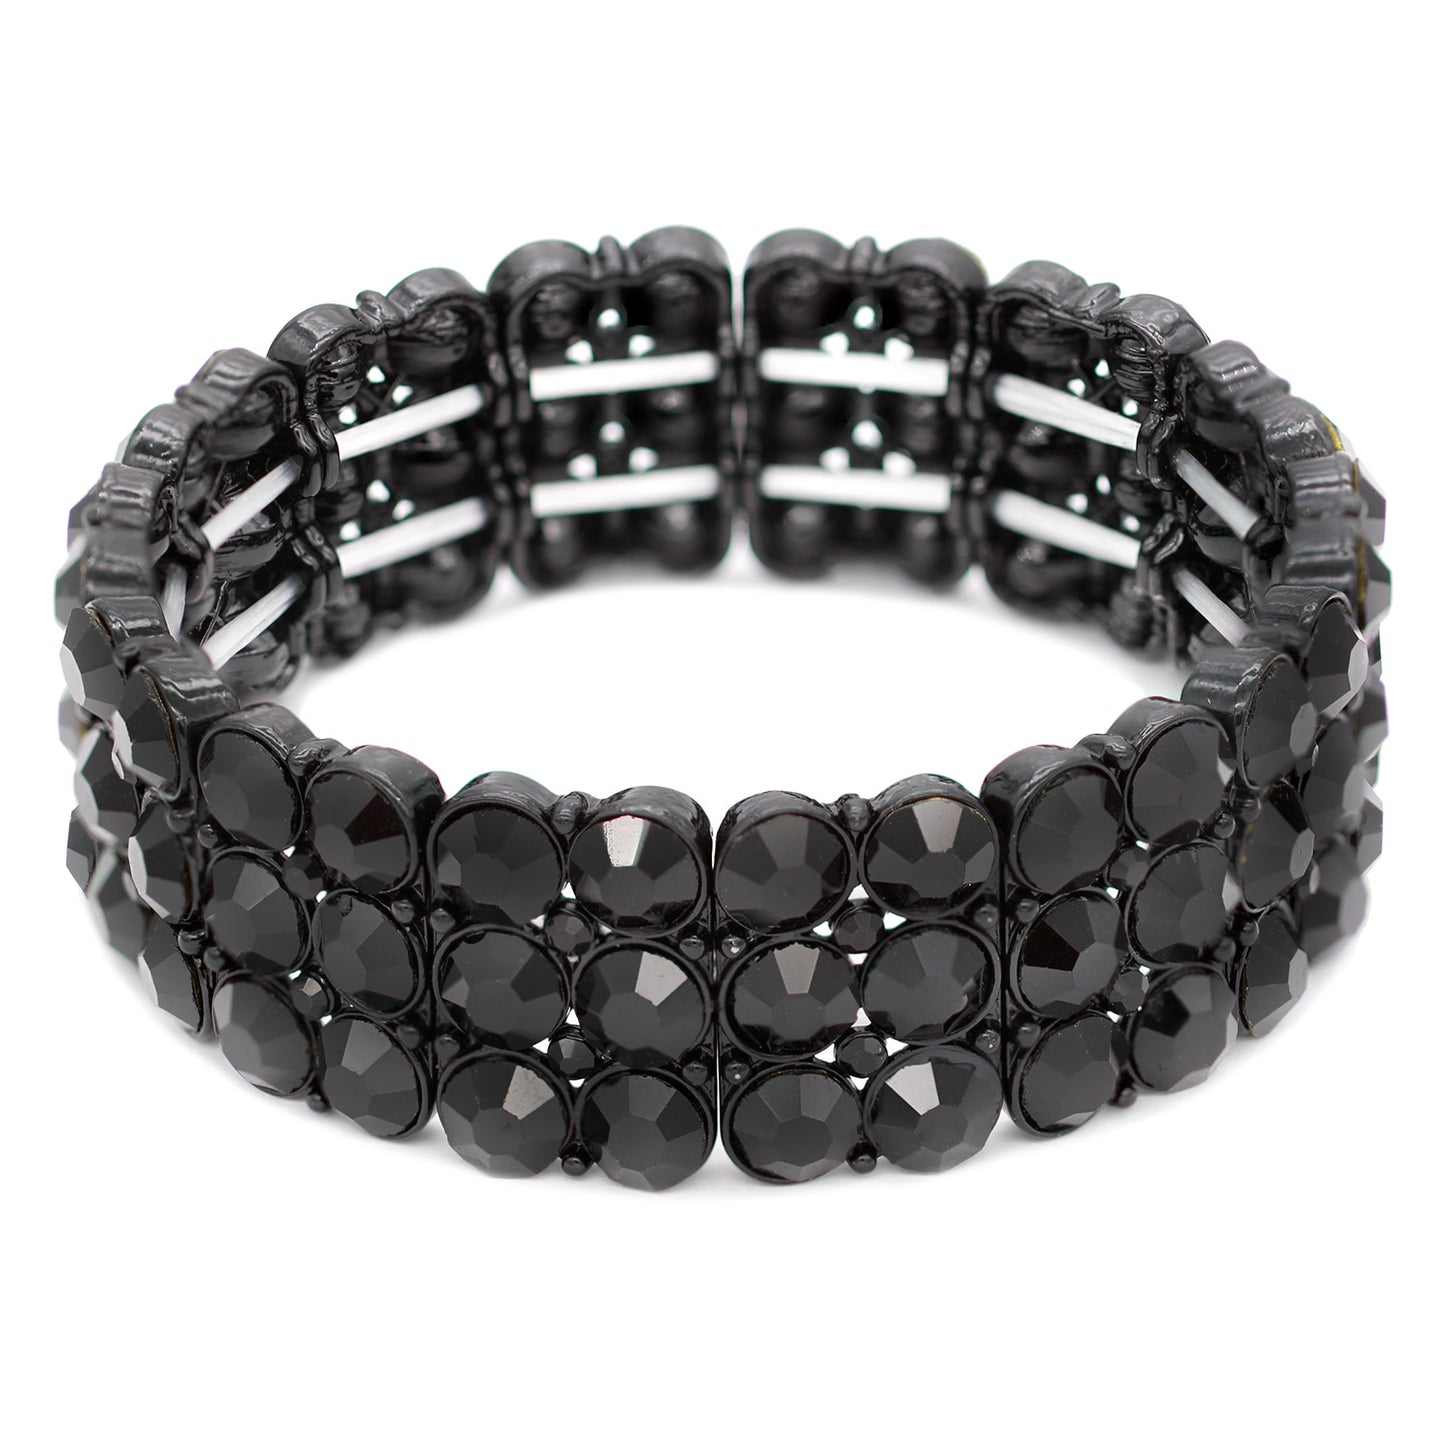 Lavencious Round Shape Rhinestone 3 Lines Stretch Bracelet Evening Party Jewelry 7” (Black Jet)